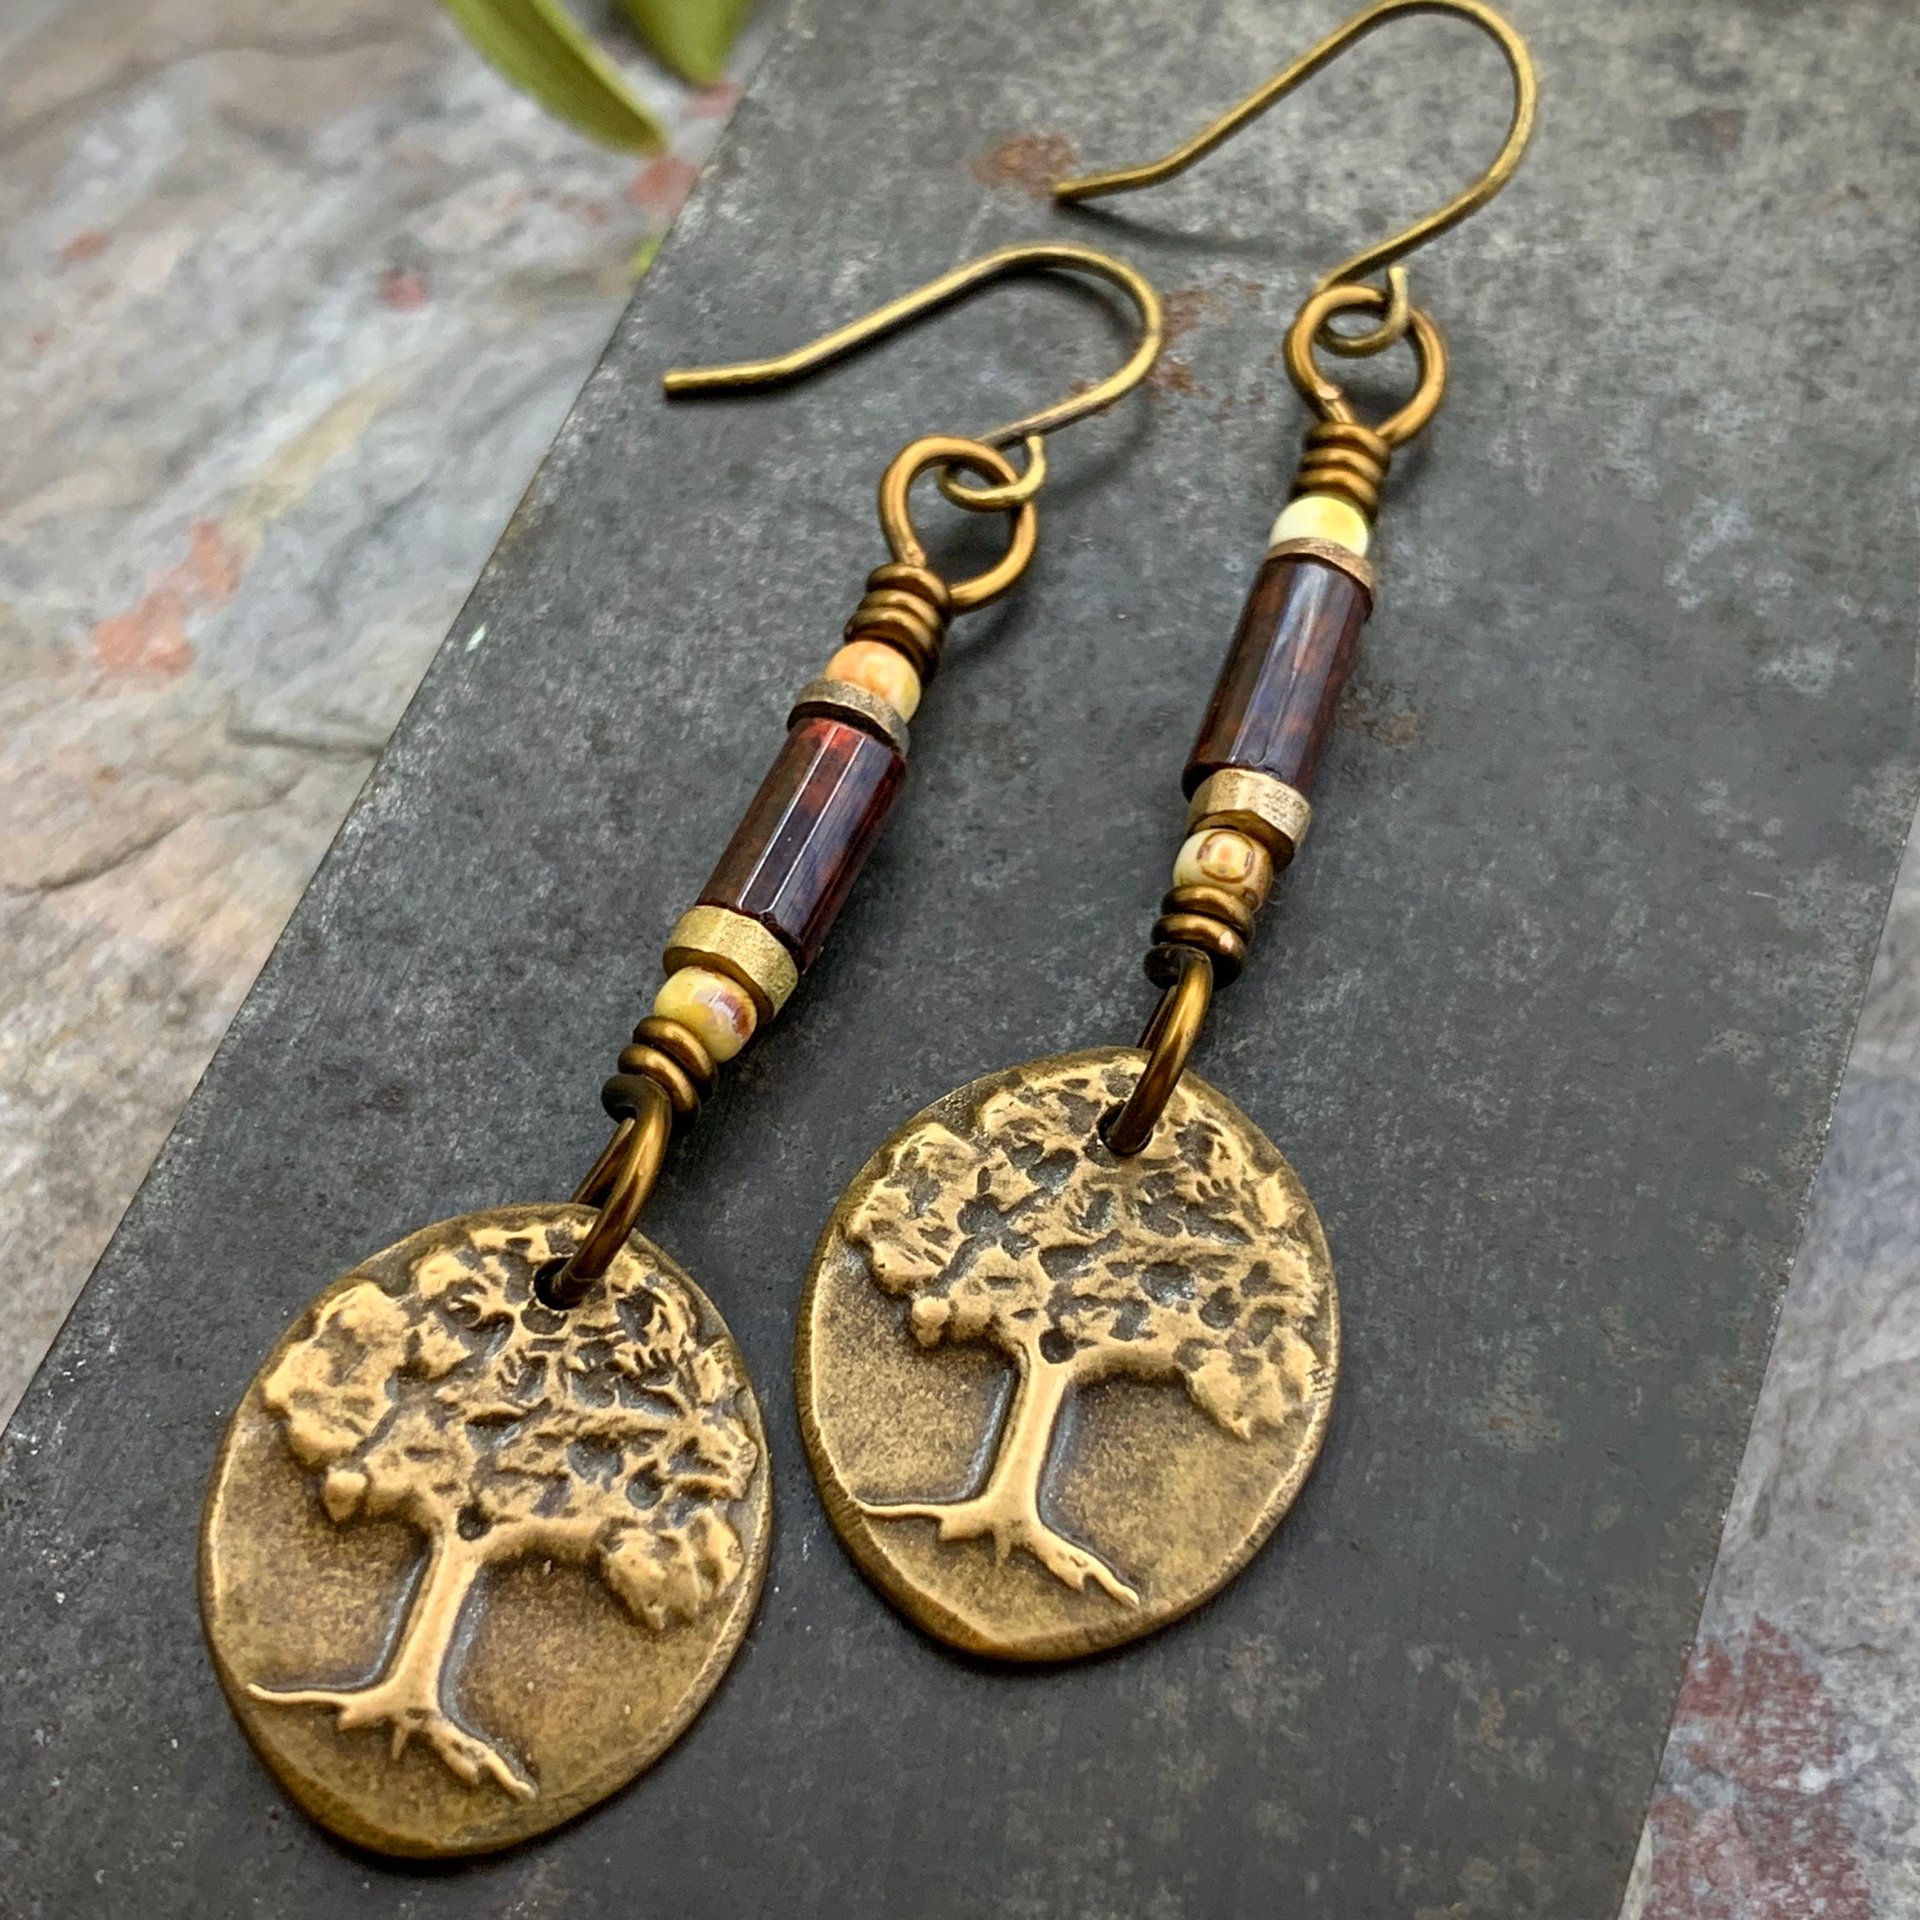 Tree of Life, Bronze Earrings, Czech Glass Beads, Hypoallergenic Ear Wires, Handmade, Art Jewelry, Wire Wrapped Beads, Oval Tree Dangles